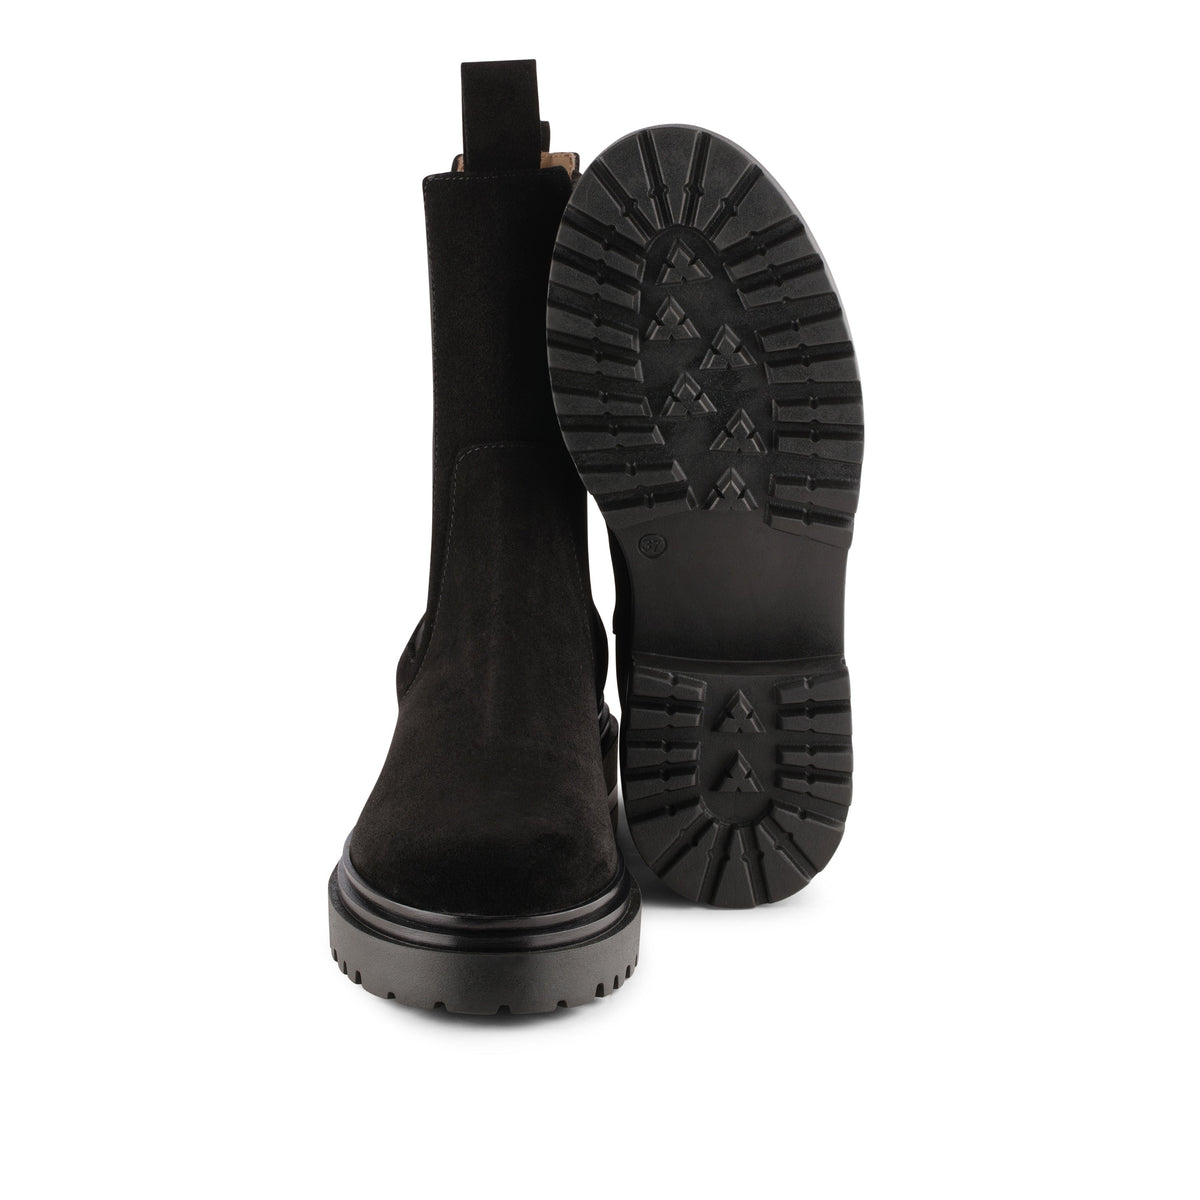 Waterproof Felisa Boots